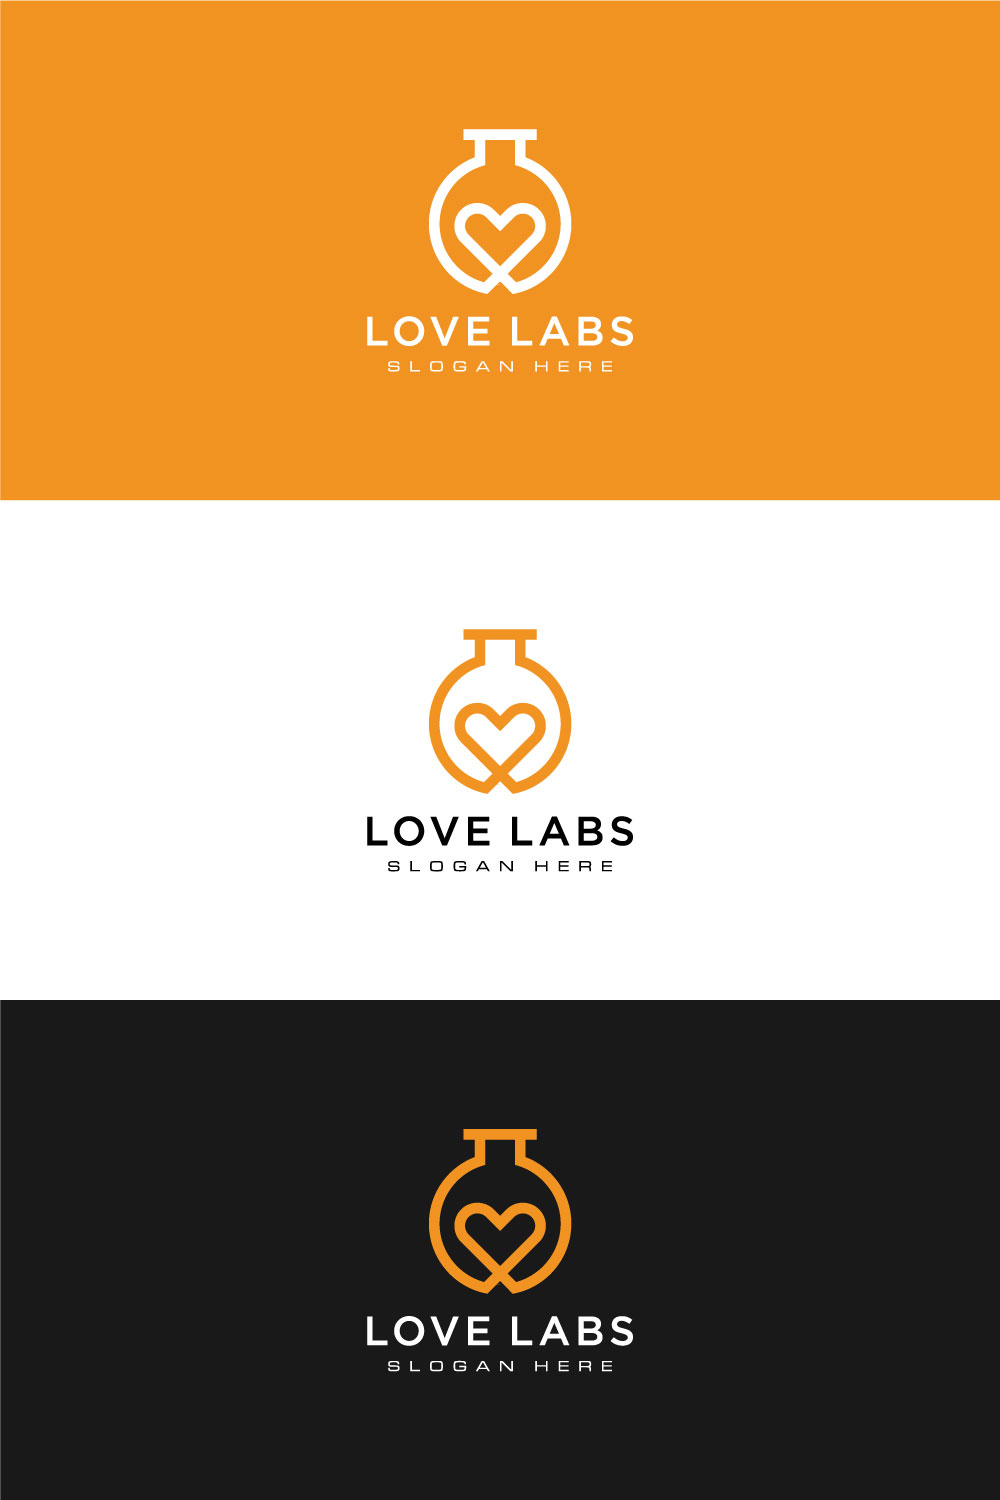 Love Lab Logo Vector Design Pinterest Image.